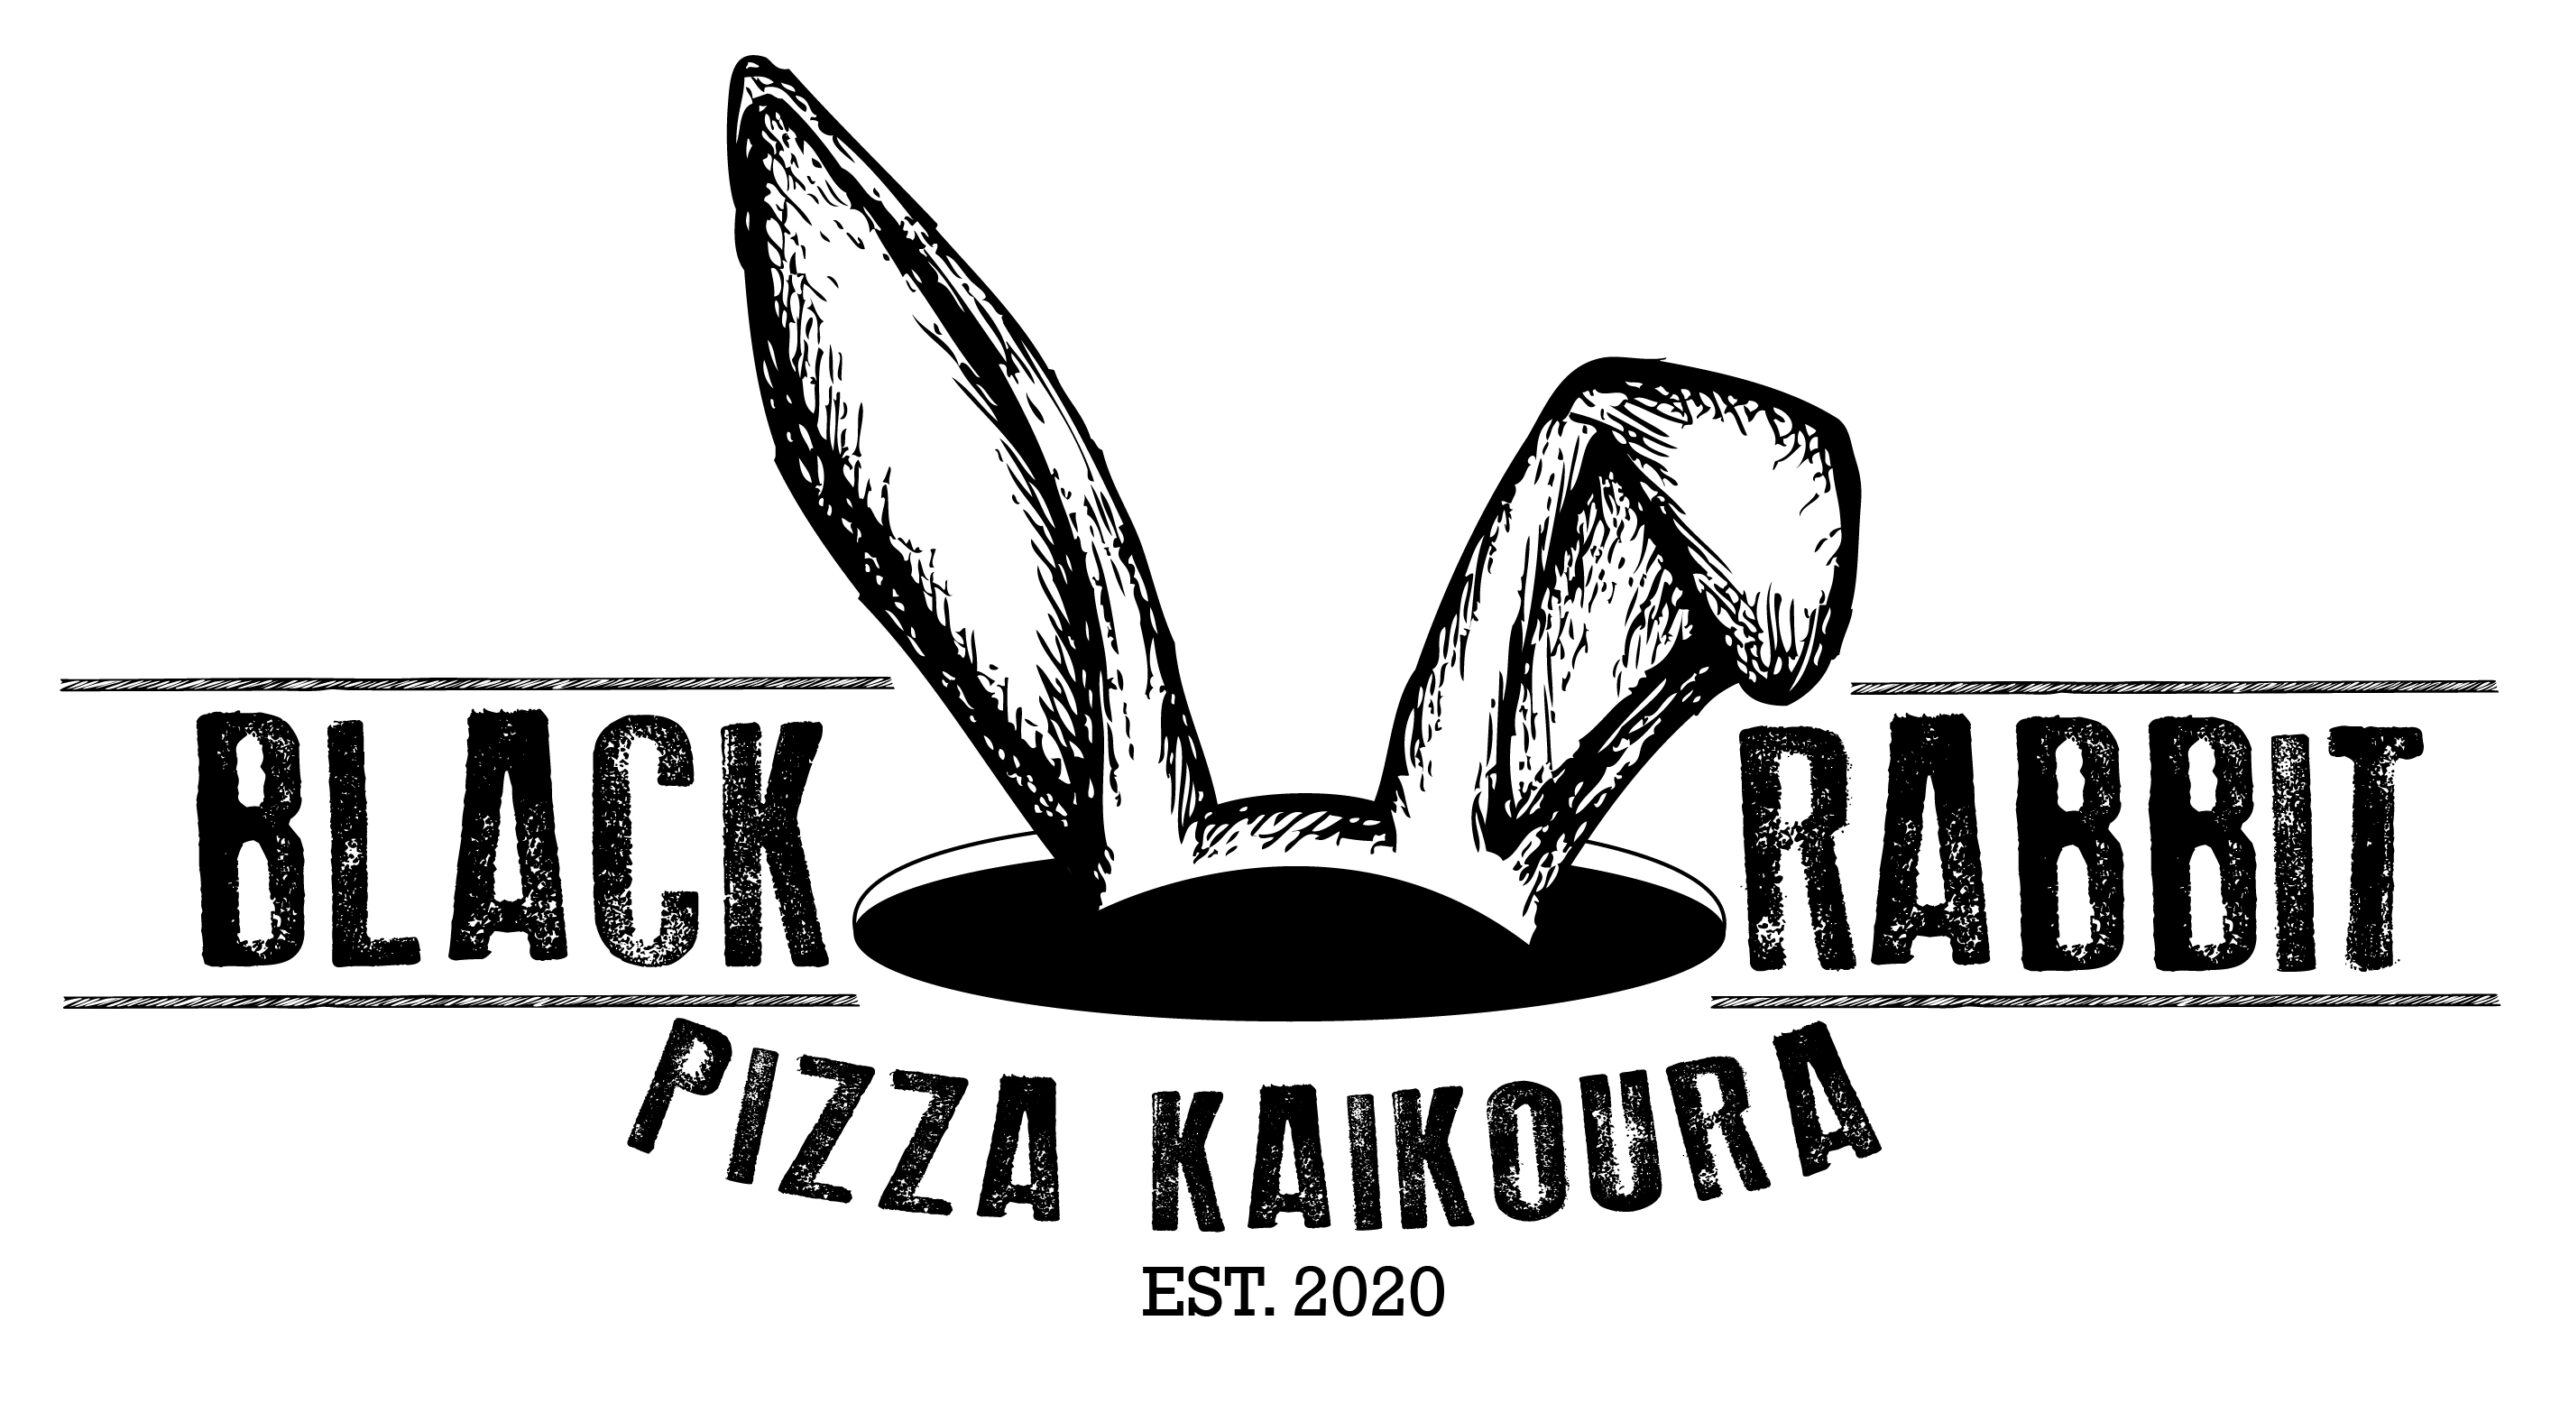 Black Rabbit Pizza